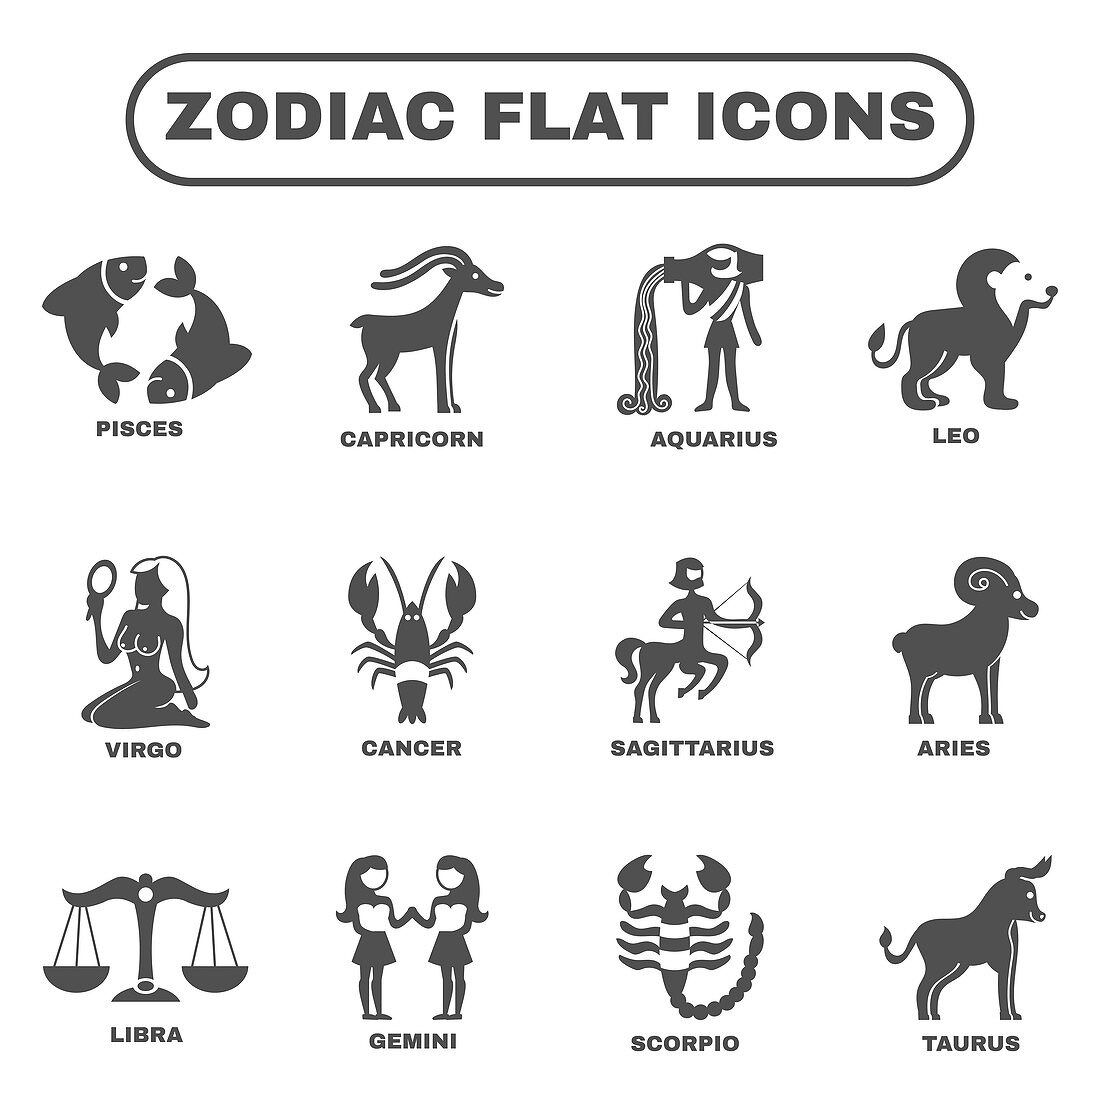 Zodiac icons, illustration